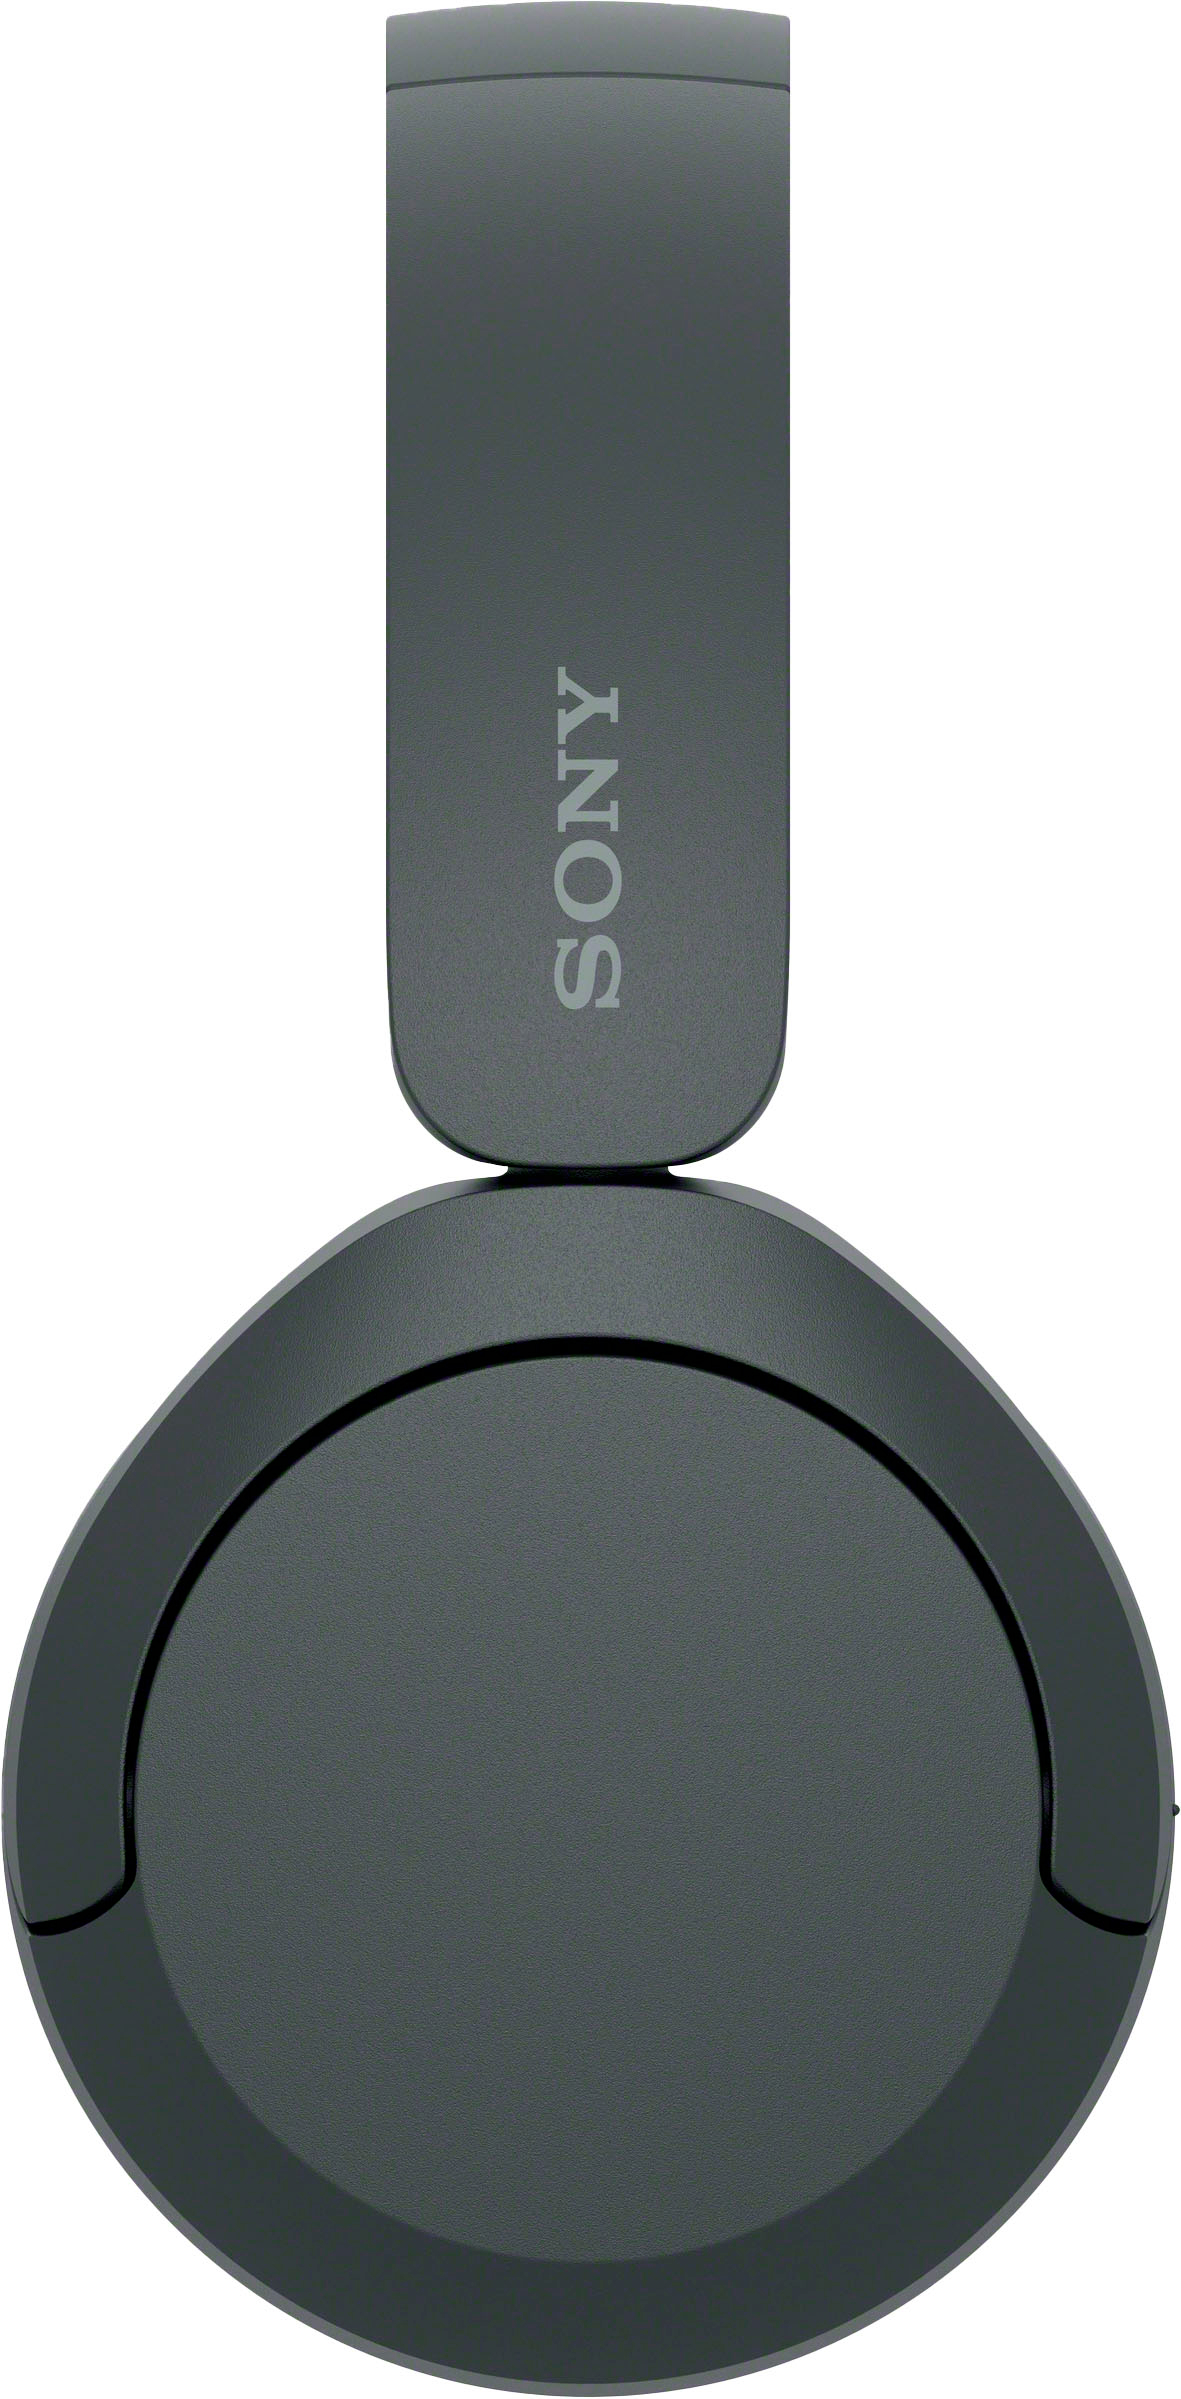 Sony WH-CH520 Wireless Bluetooth On-Ear Headphones